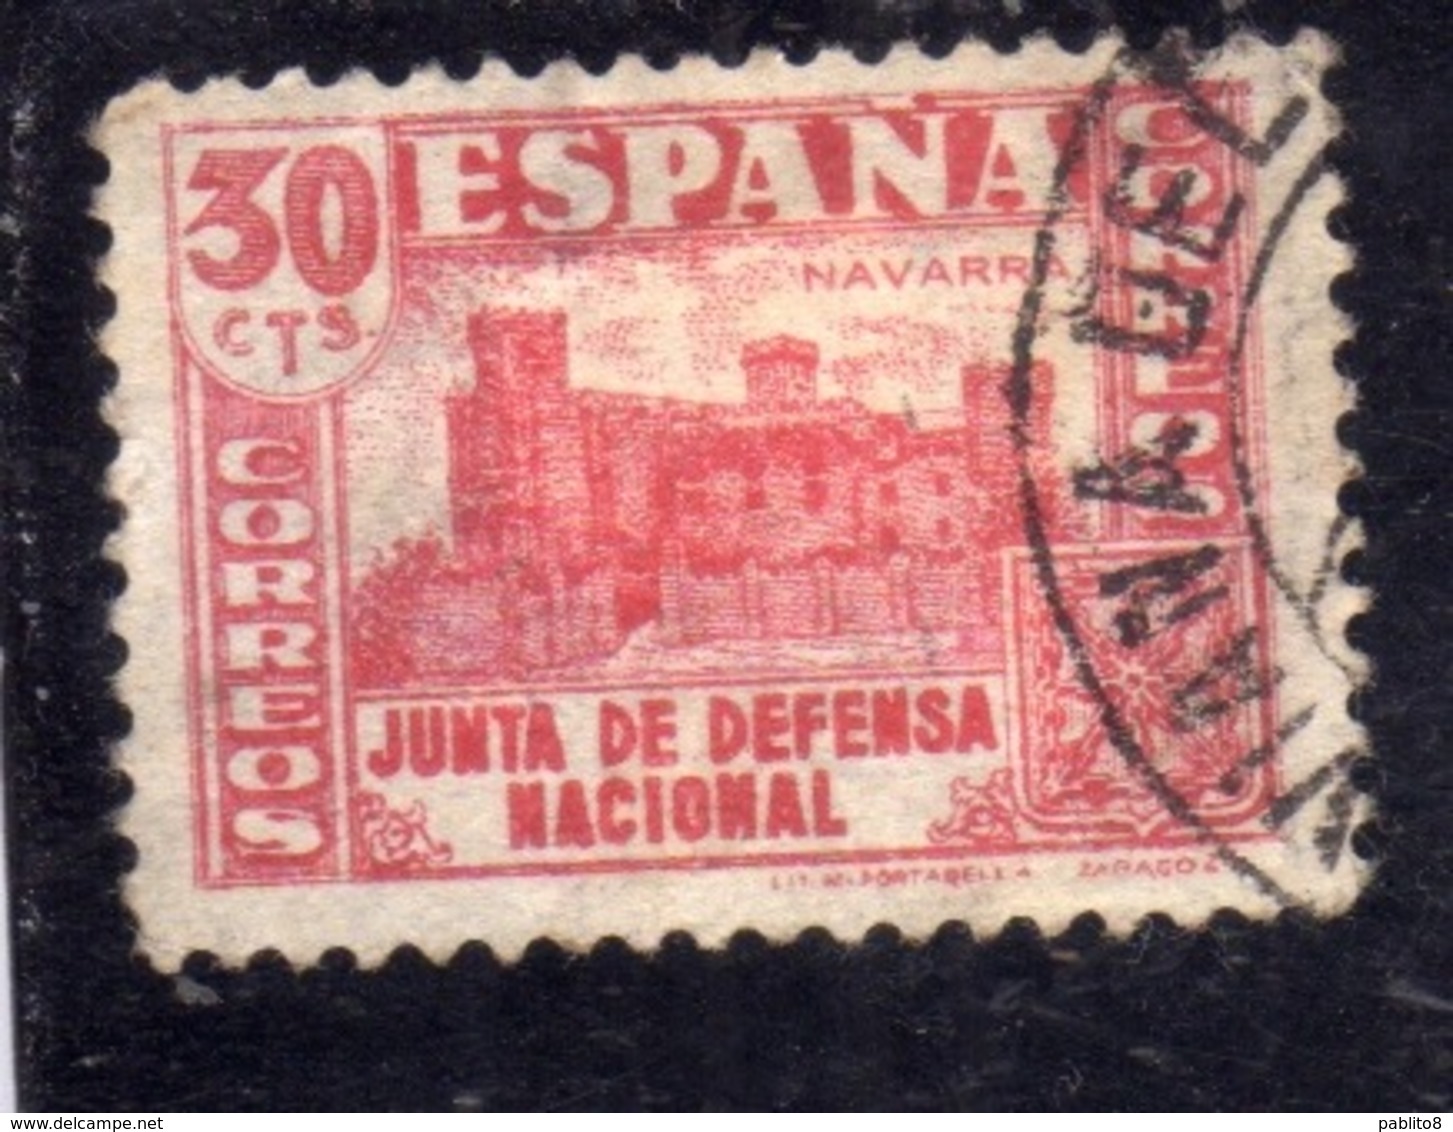 SPAIN ESPAÑA SPAGNA 1936 XAVIER CASTLE NAVARRE JUNTA DE DEFENSA NATIONAL CENT. 30c USED USATO OBLITERE' - Gebraucht